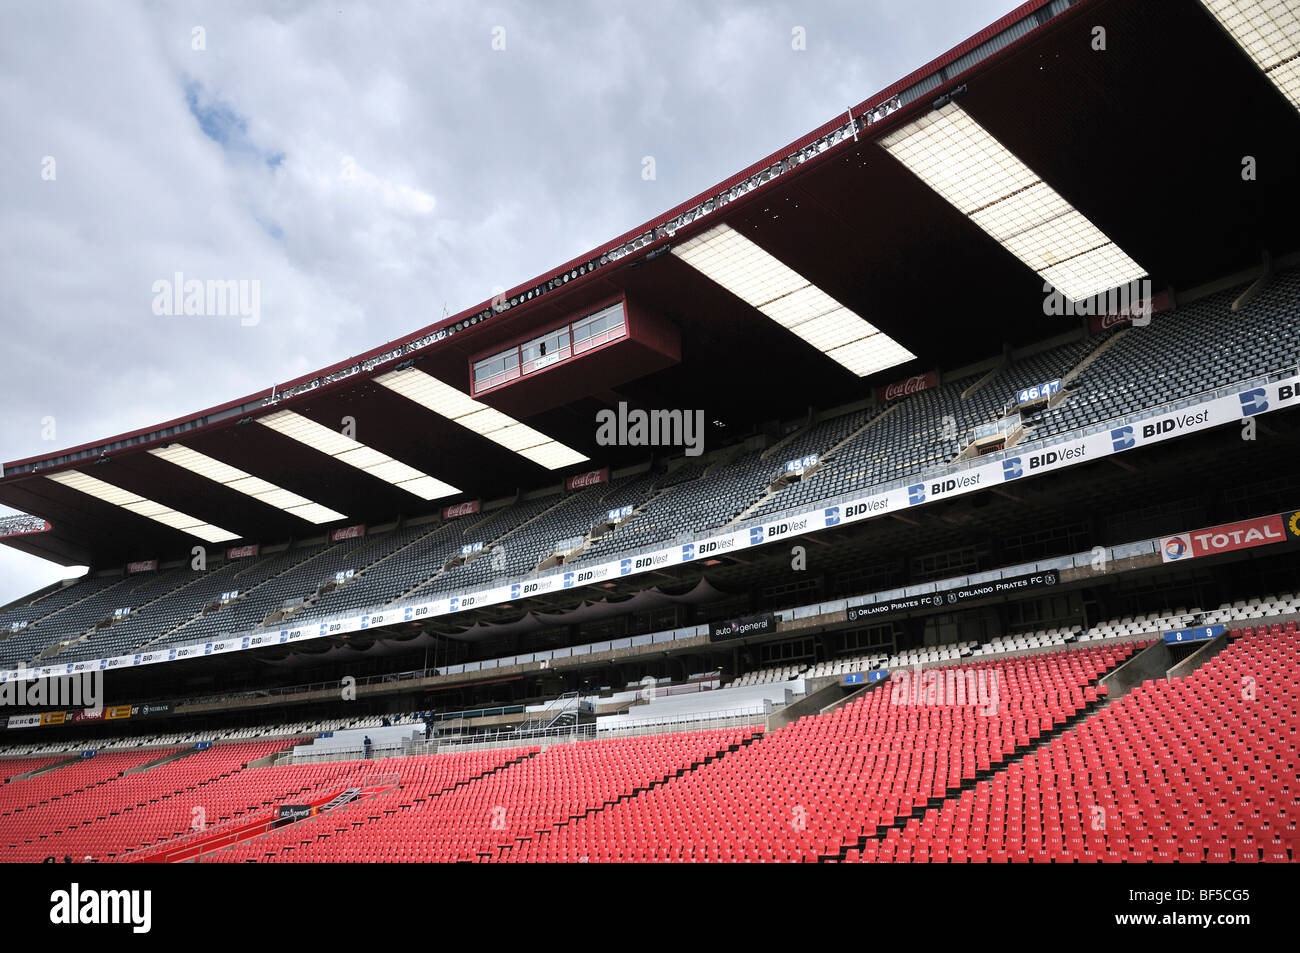 2010 FIFA World Cup, leer stehen im Ellis Park oder Coca-Cola Park Stadion in Johannesburg, Südafrika, Afrika Stockfoto